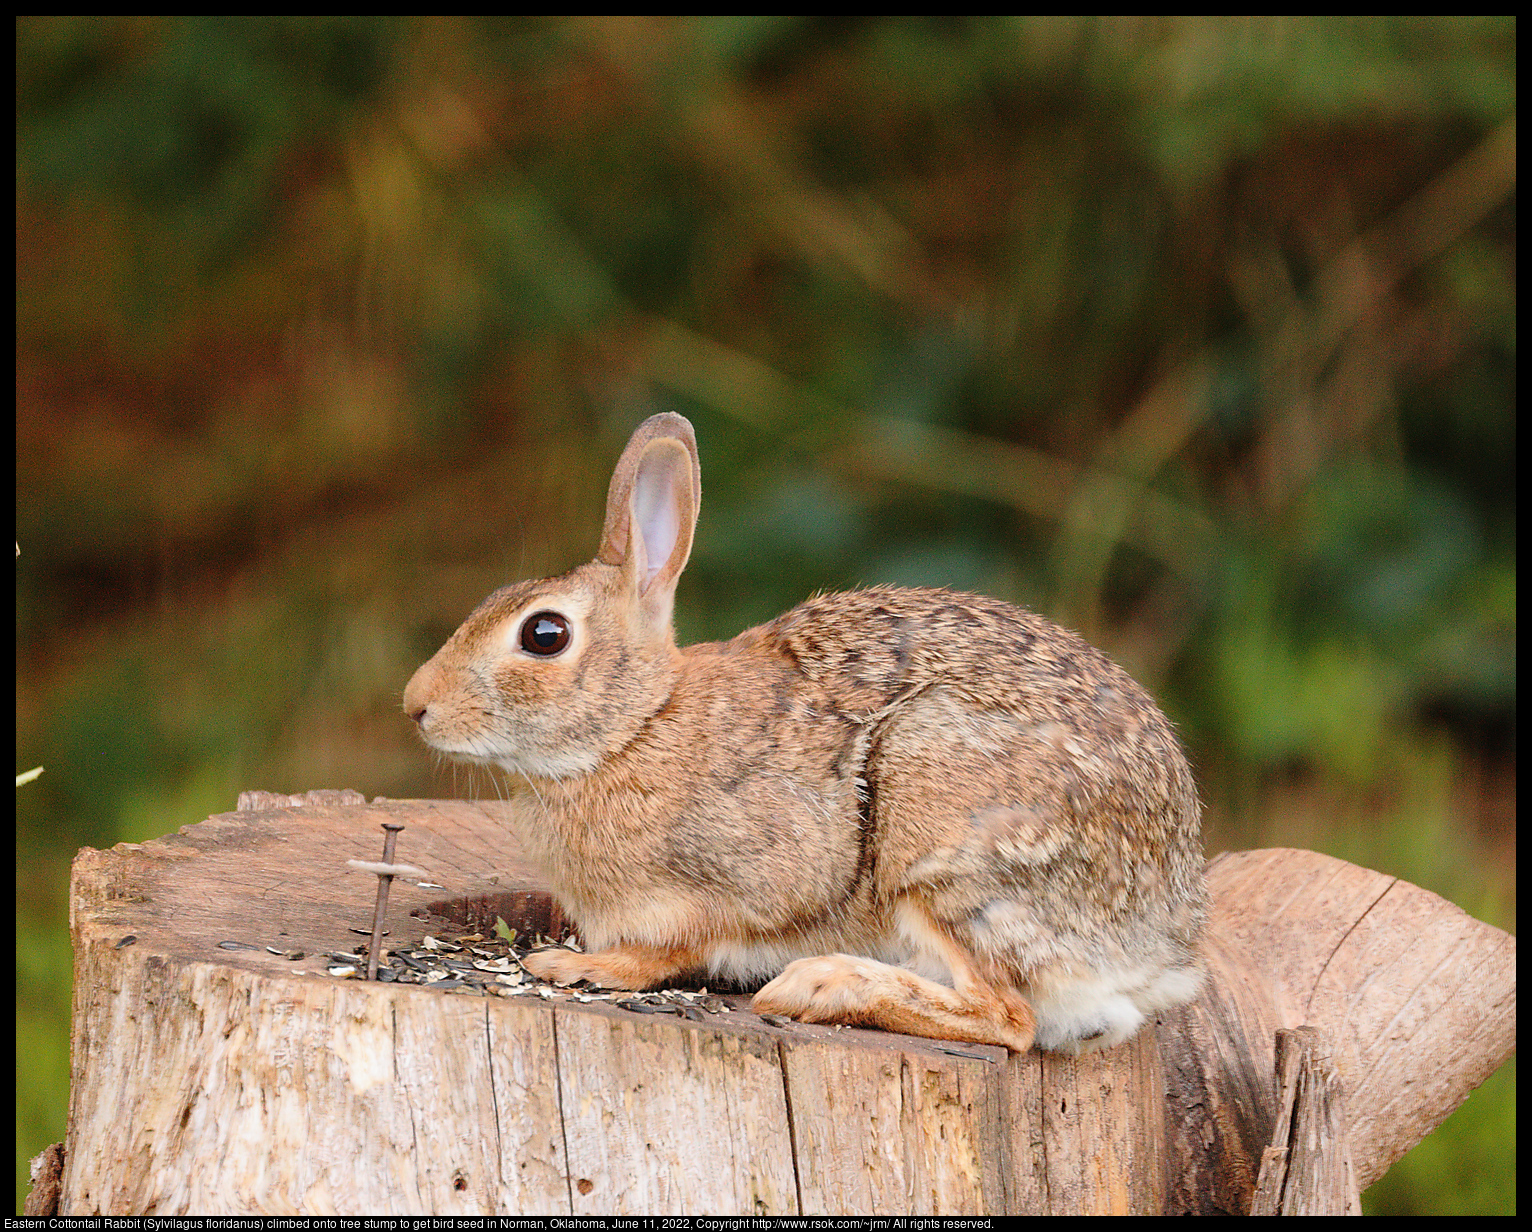 Eastern Cottontail Rabbit (Sylvilagus floridanus) climbed onto tree stump to get bird seed in Norman, Oklahoma, June 11, 2022